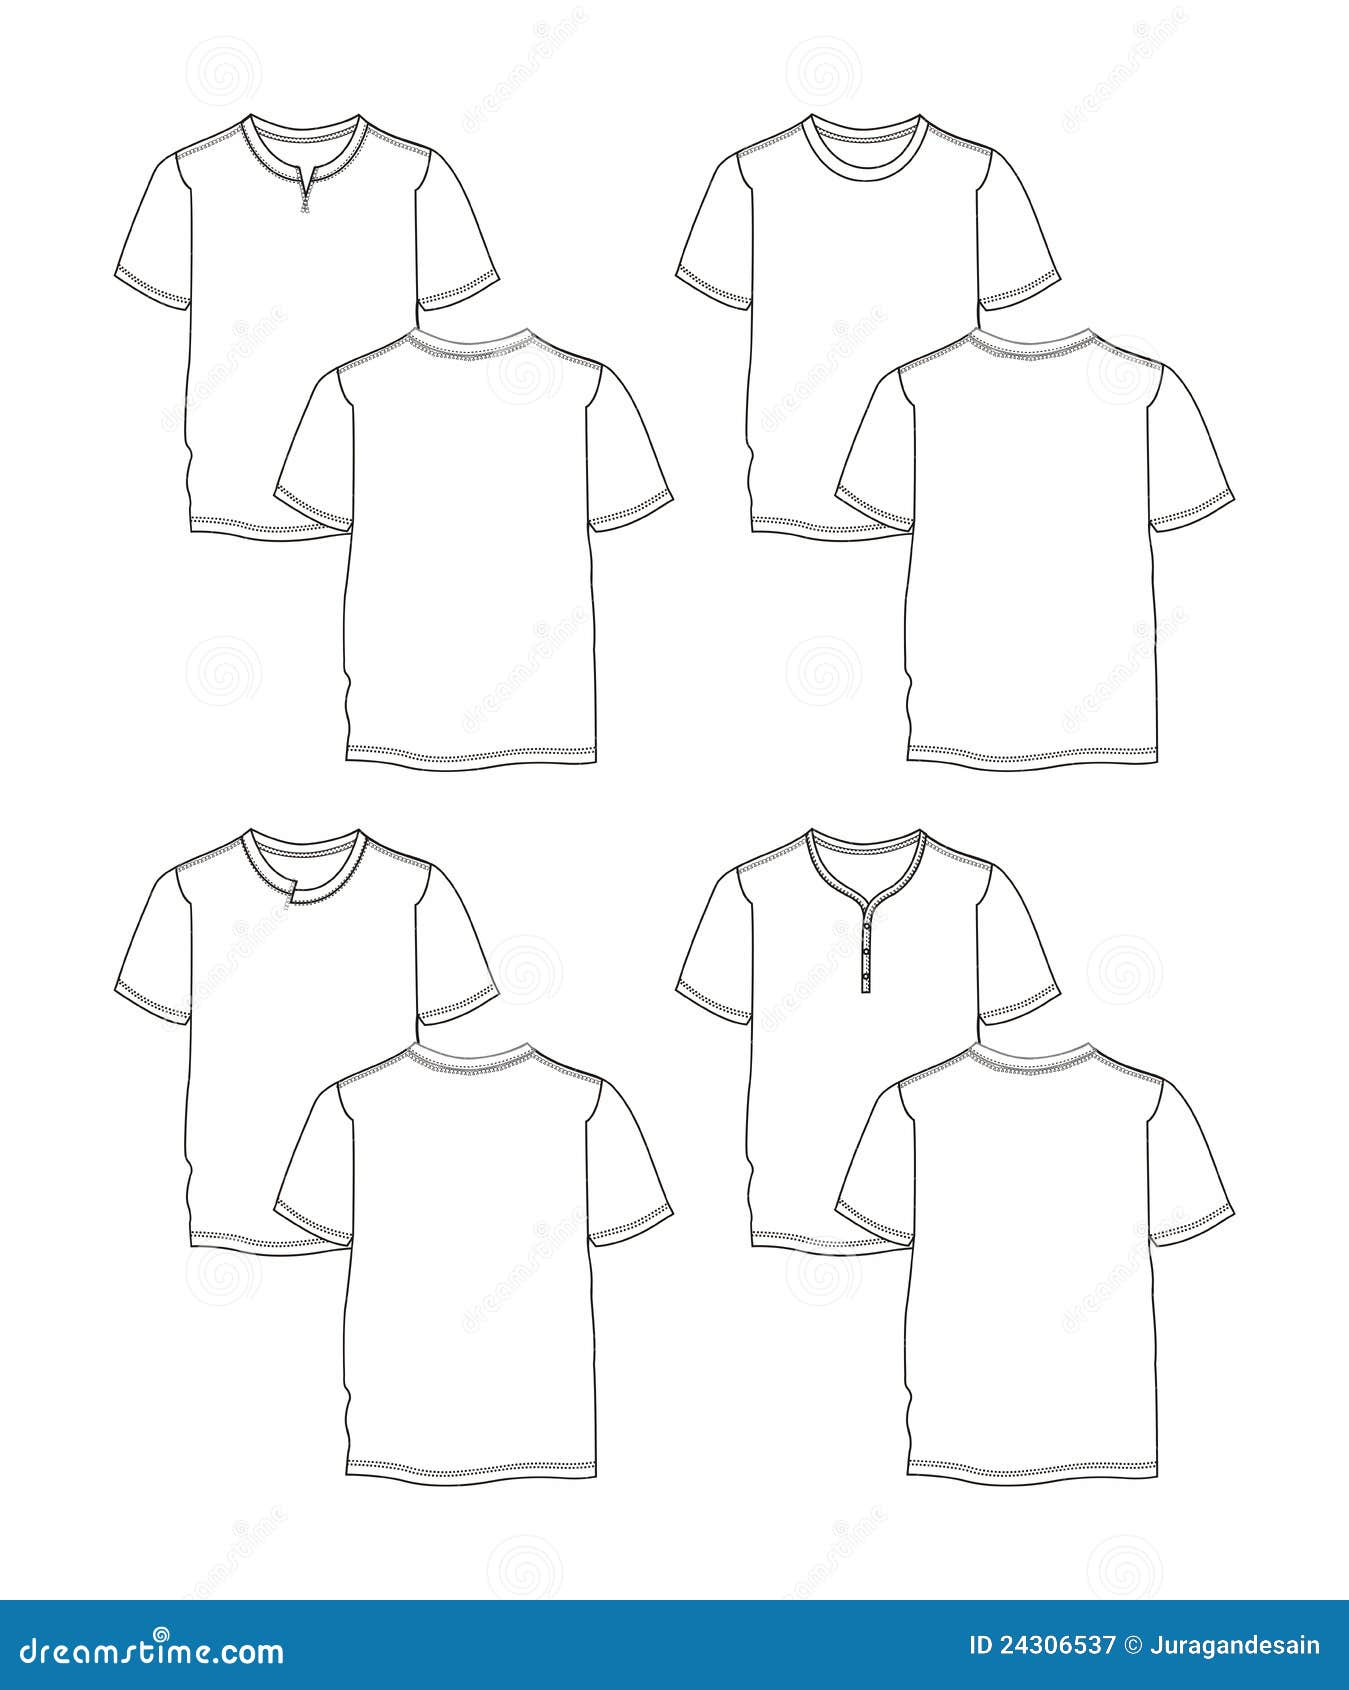 Shirts template stock illustration. Illustration of belt - 24306537